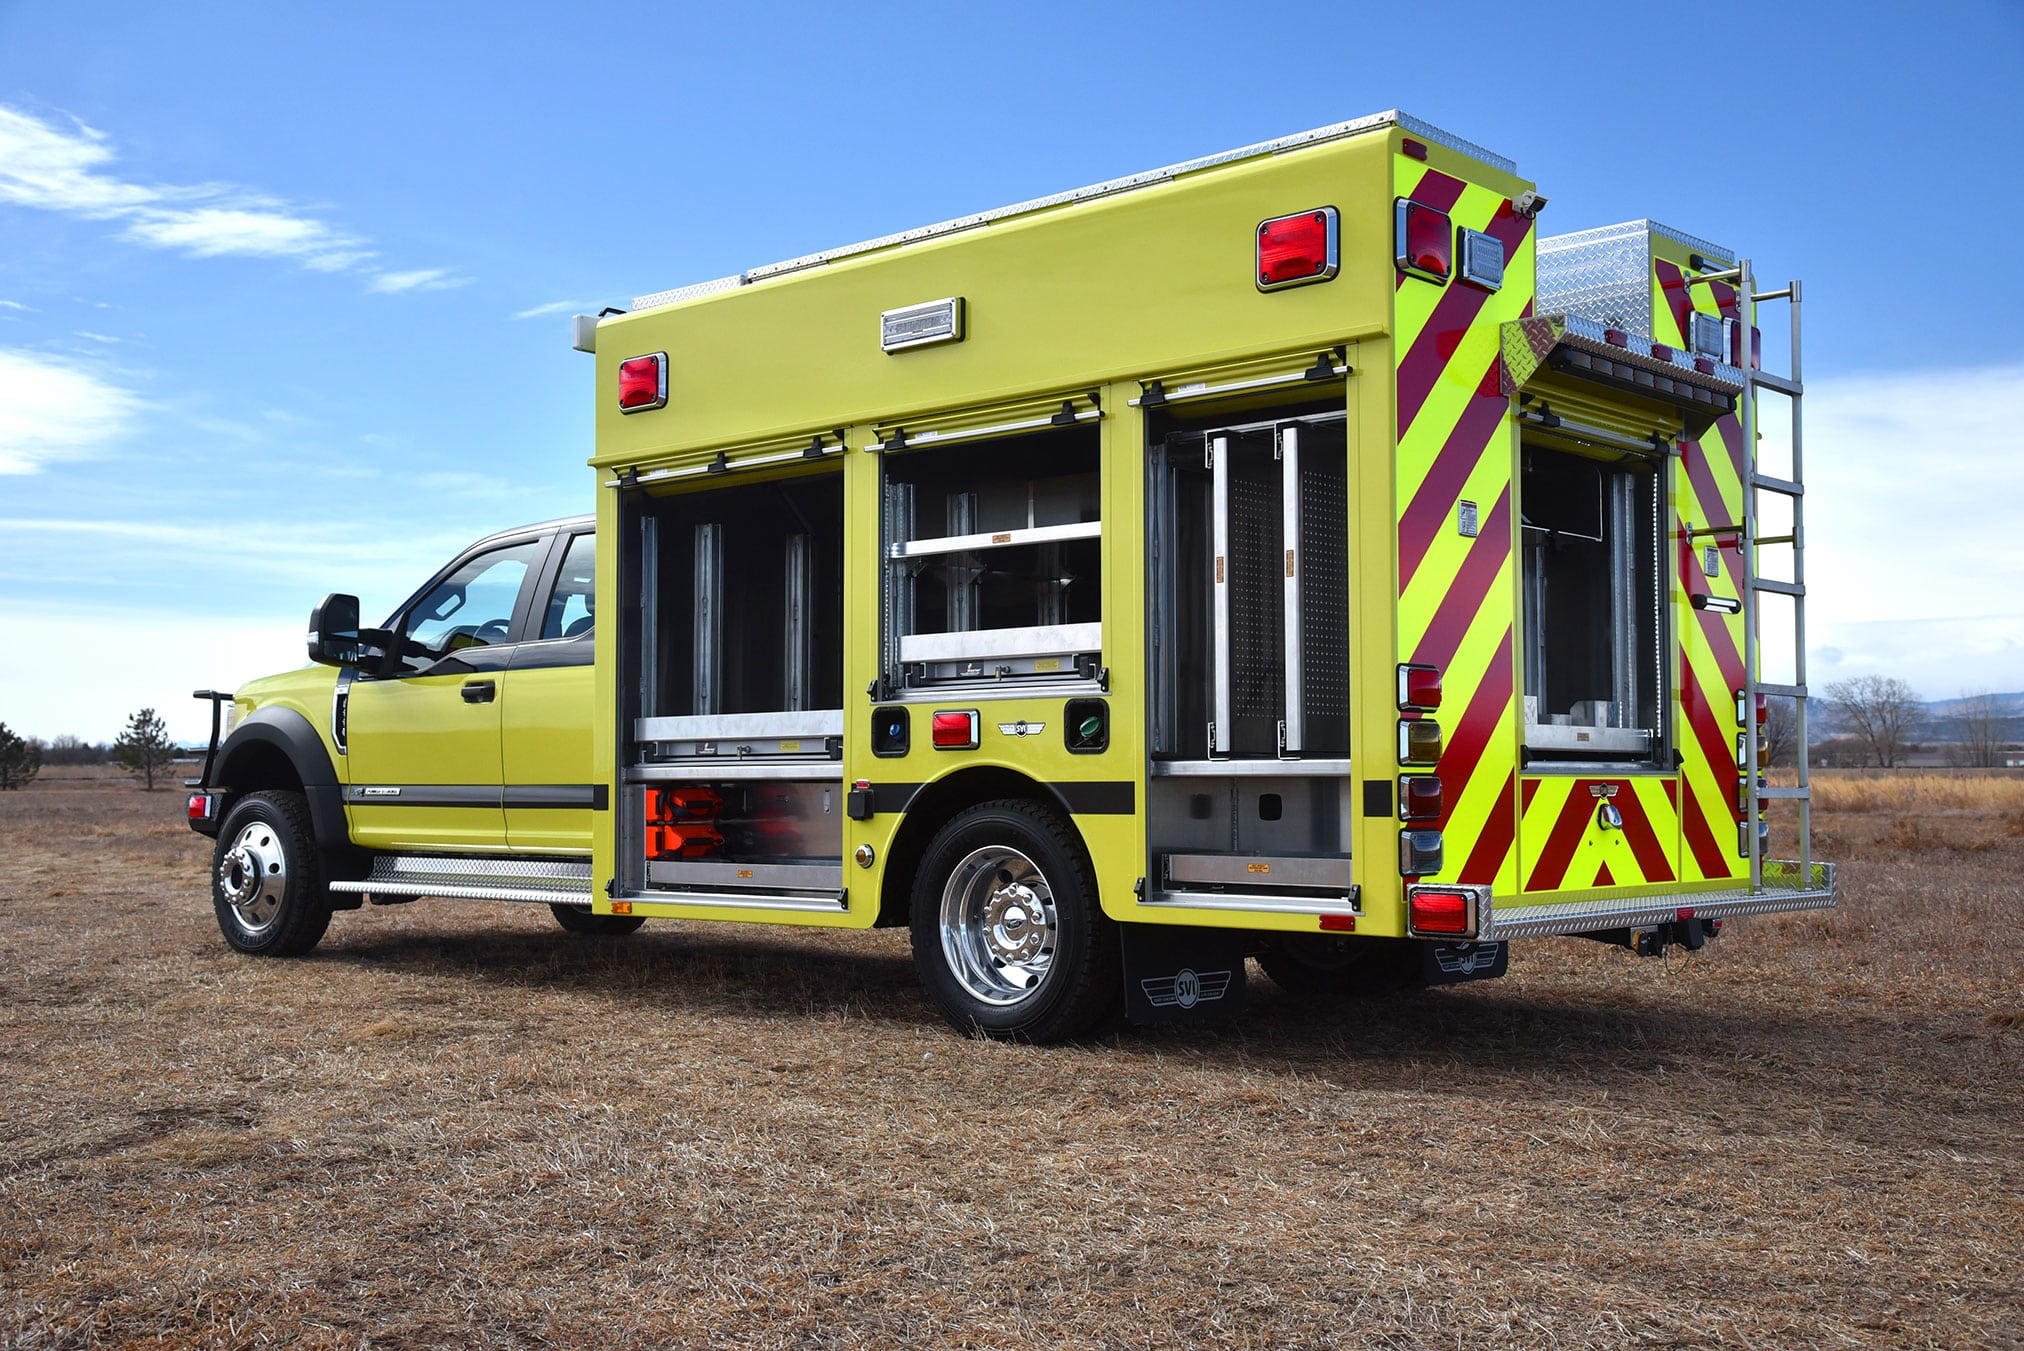 Featured image for “Resort Bear Creek, MI Fire Department Light Rescue Truck #1023”